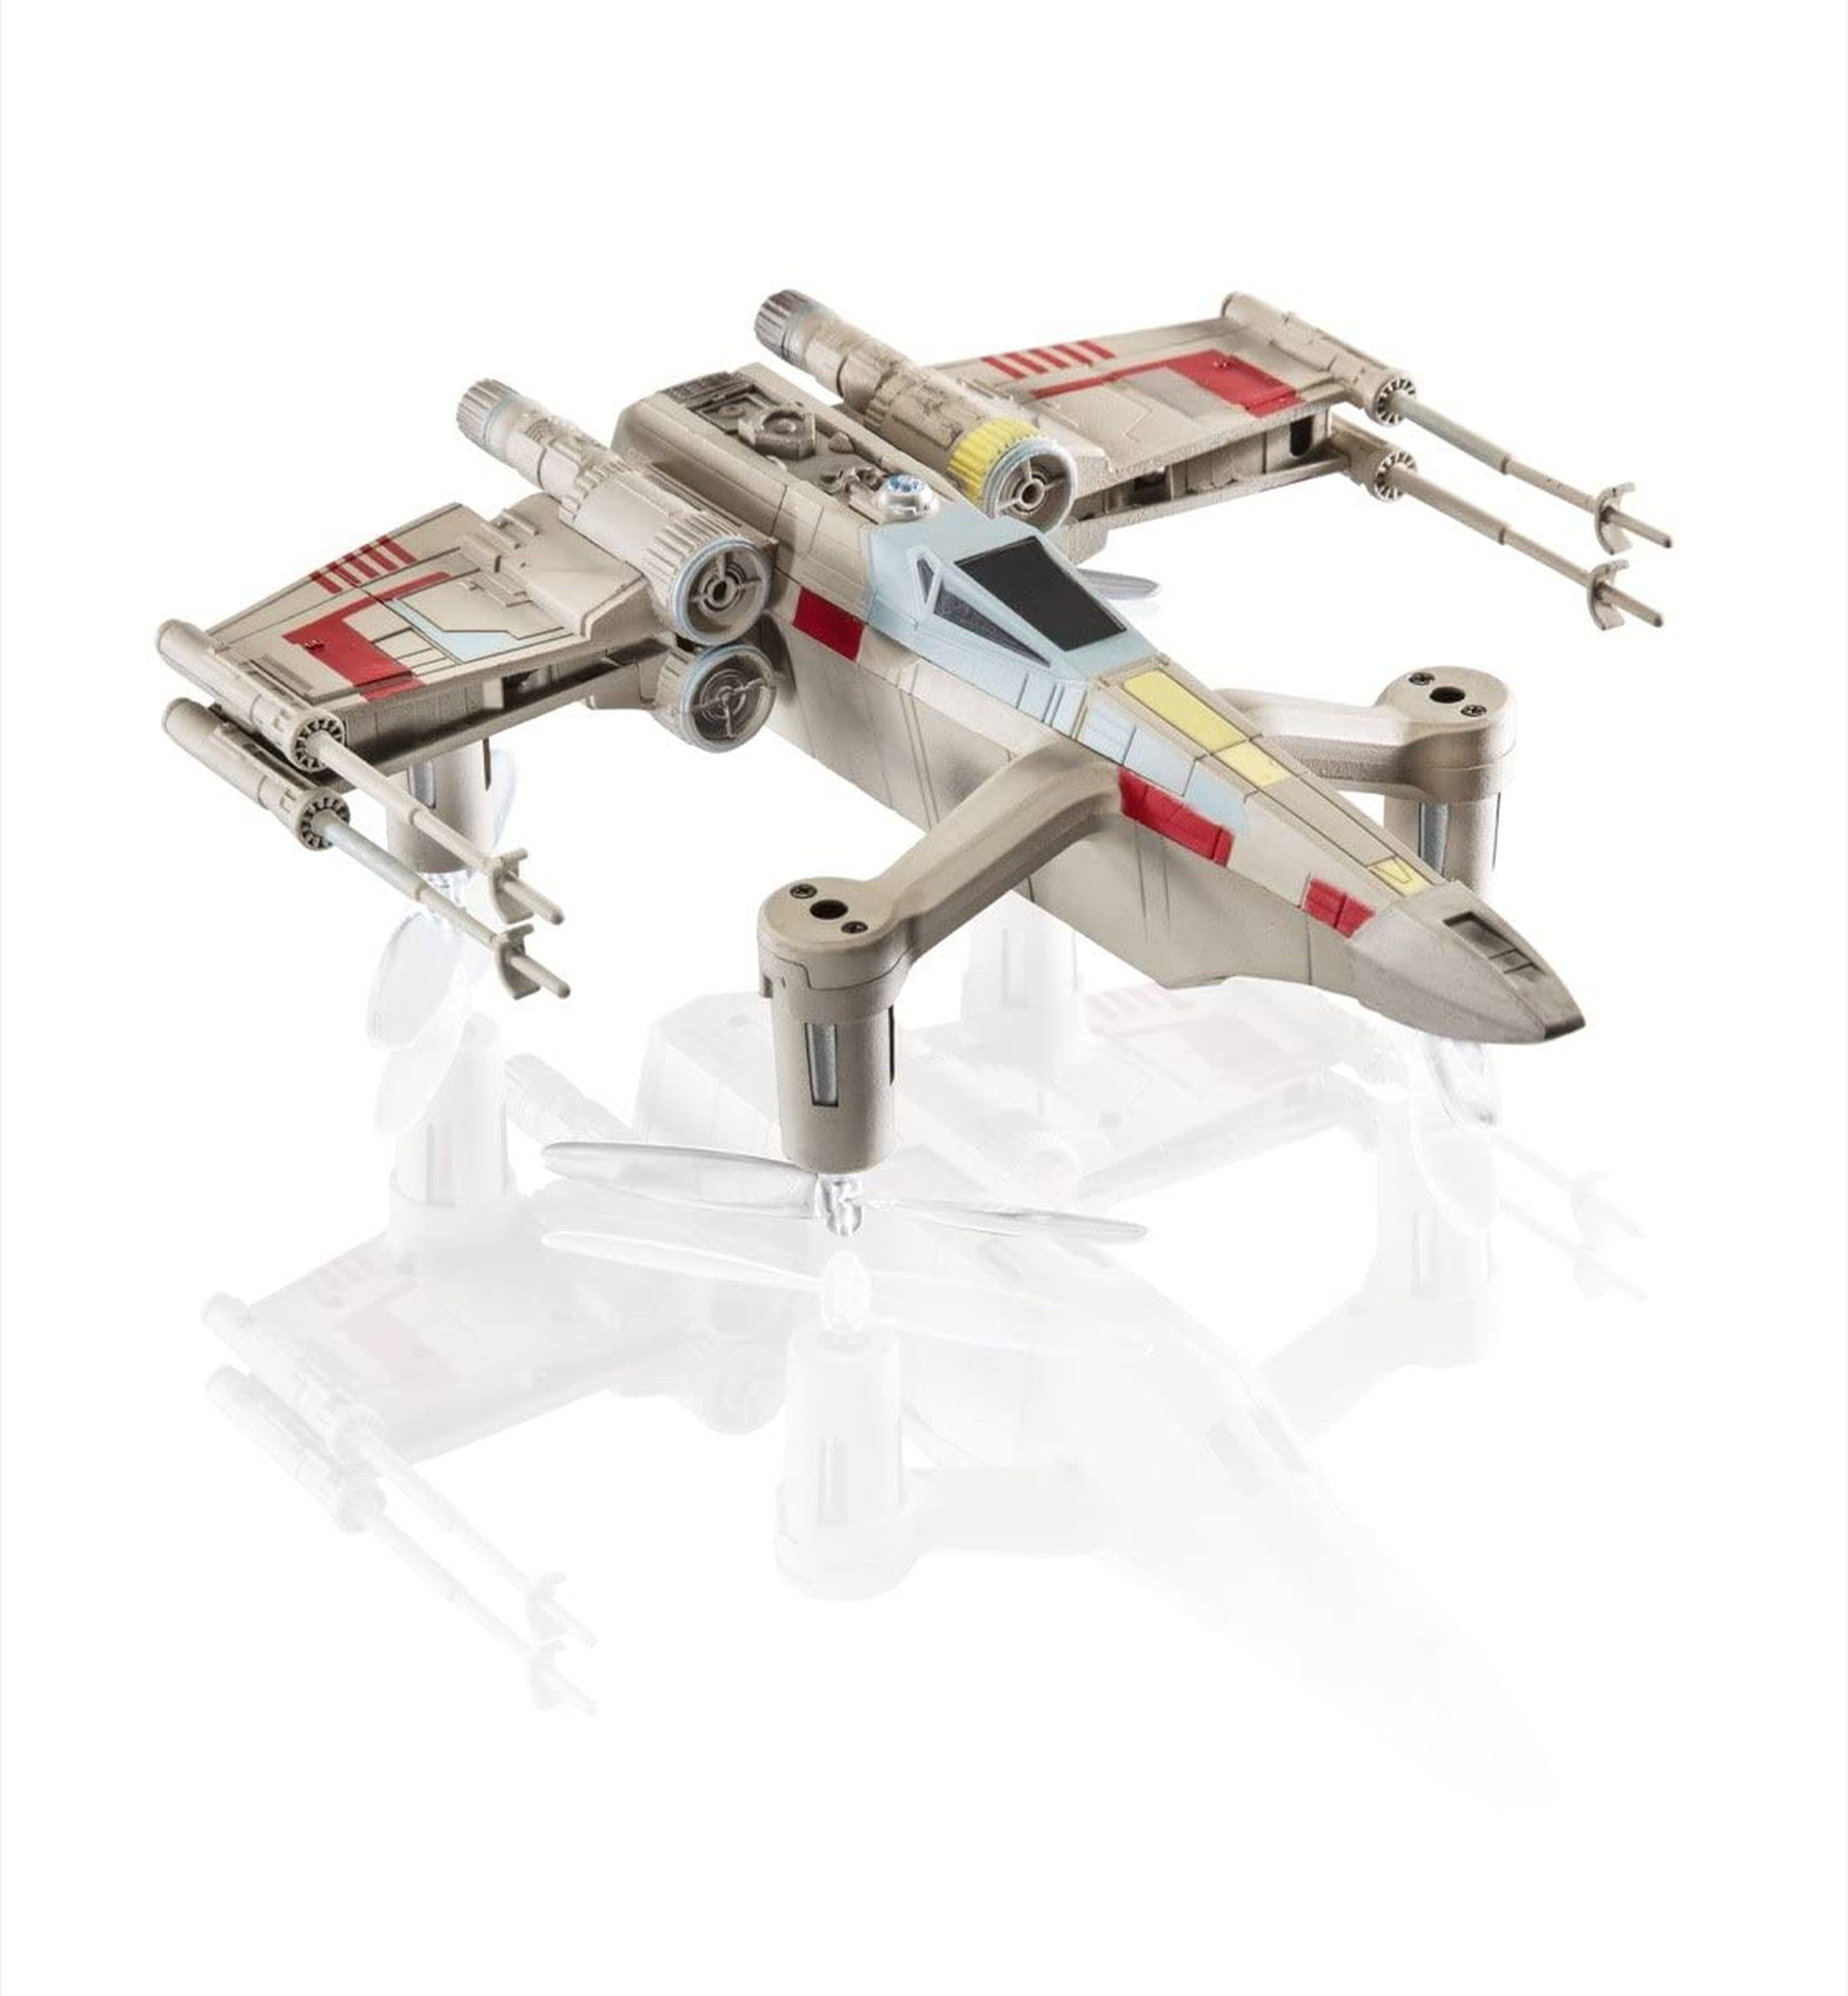 Dron de batalla Star Wars modelo X-Wing